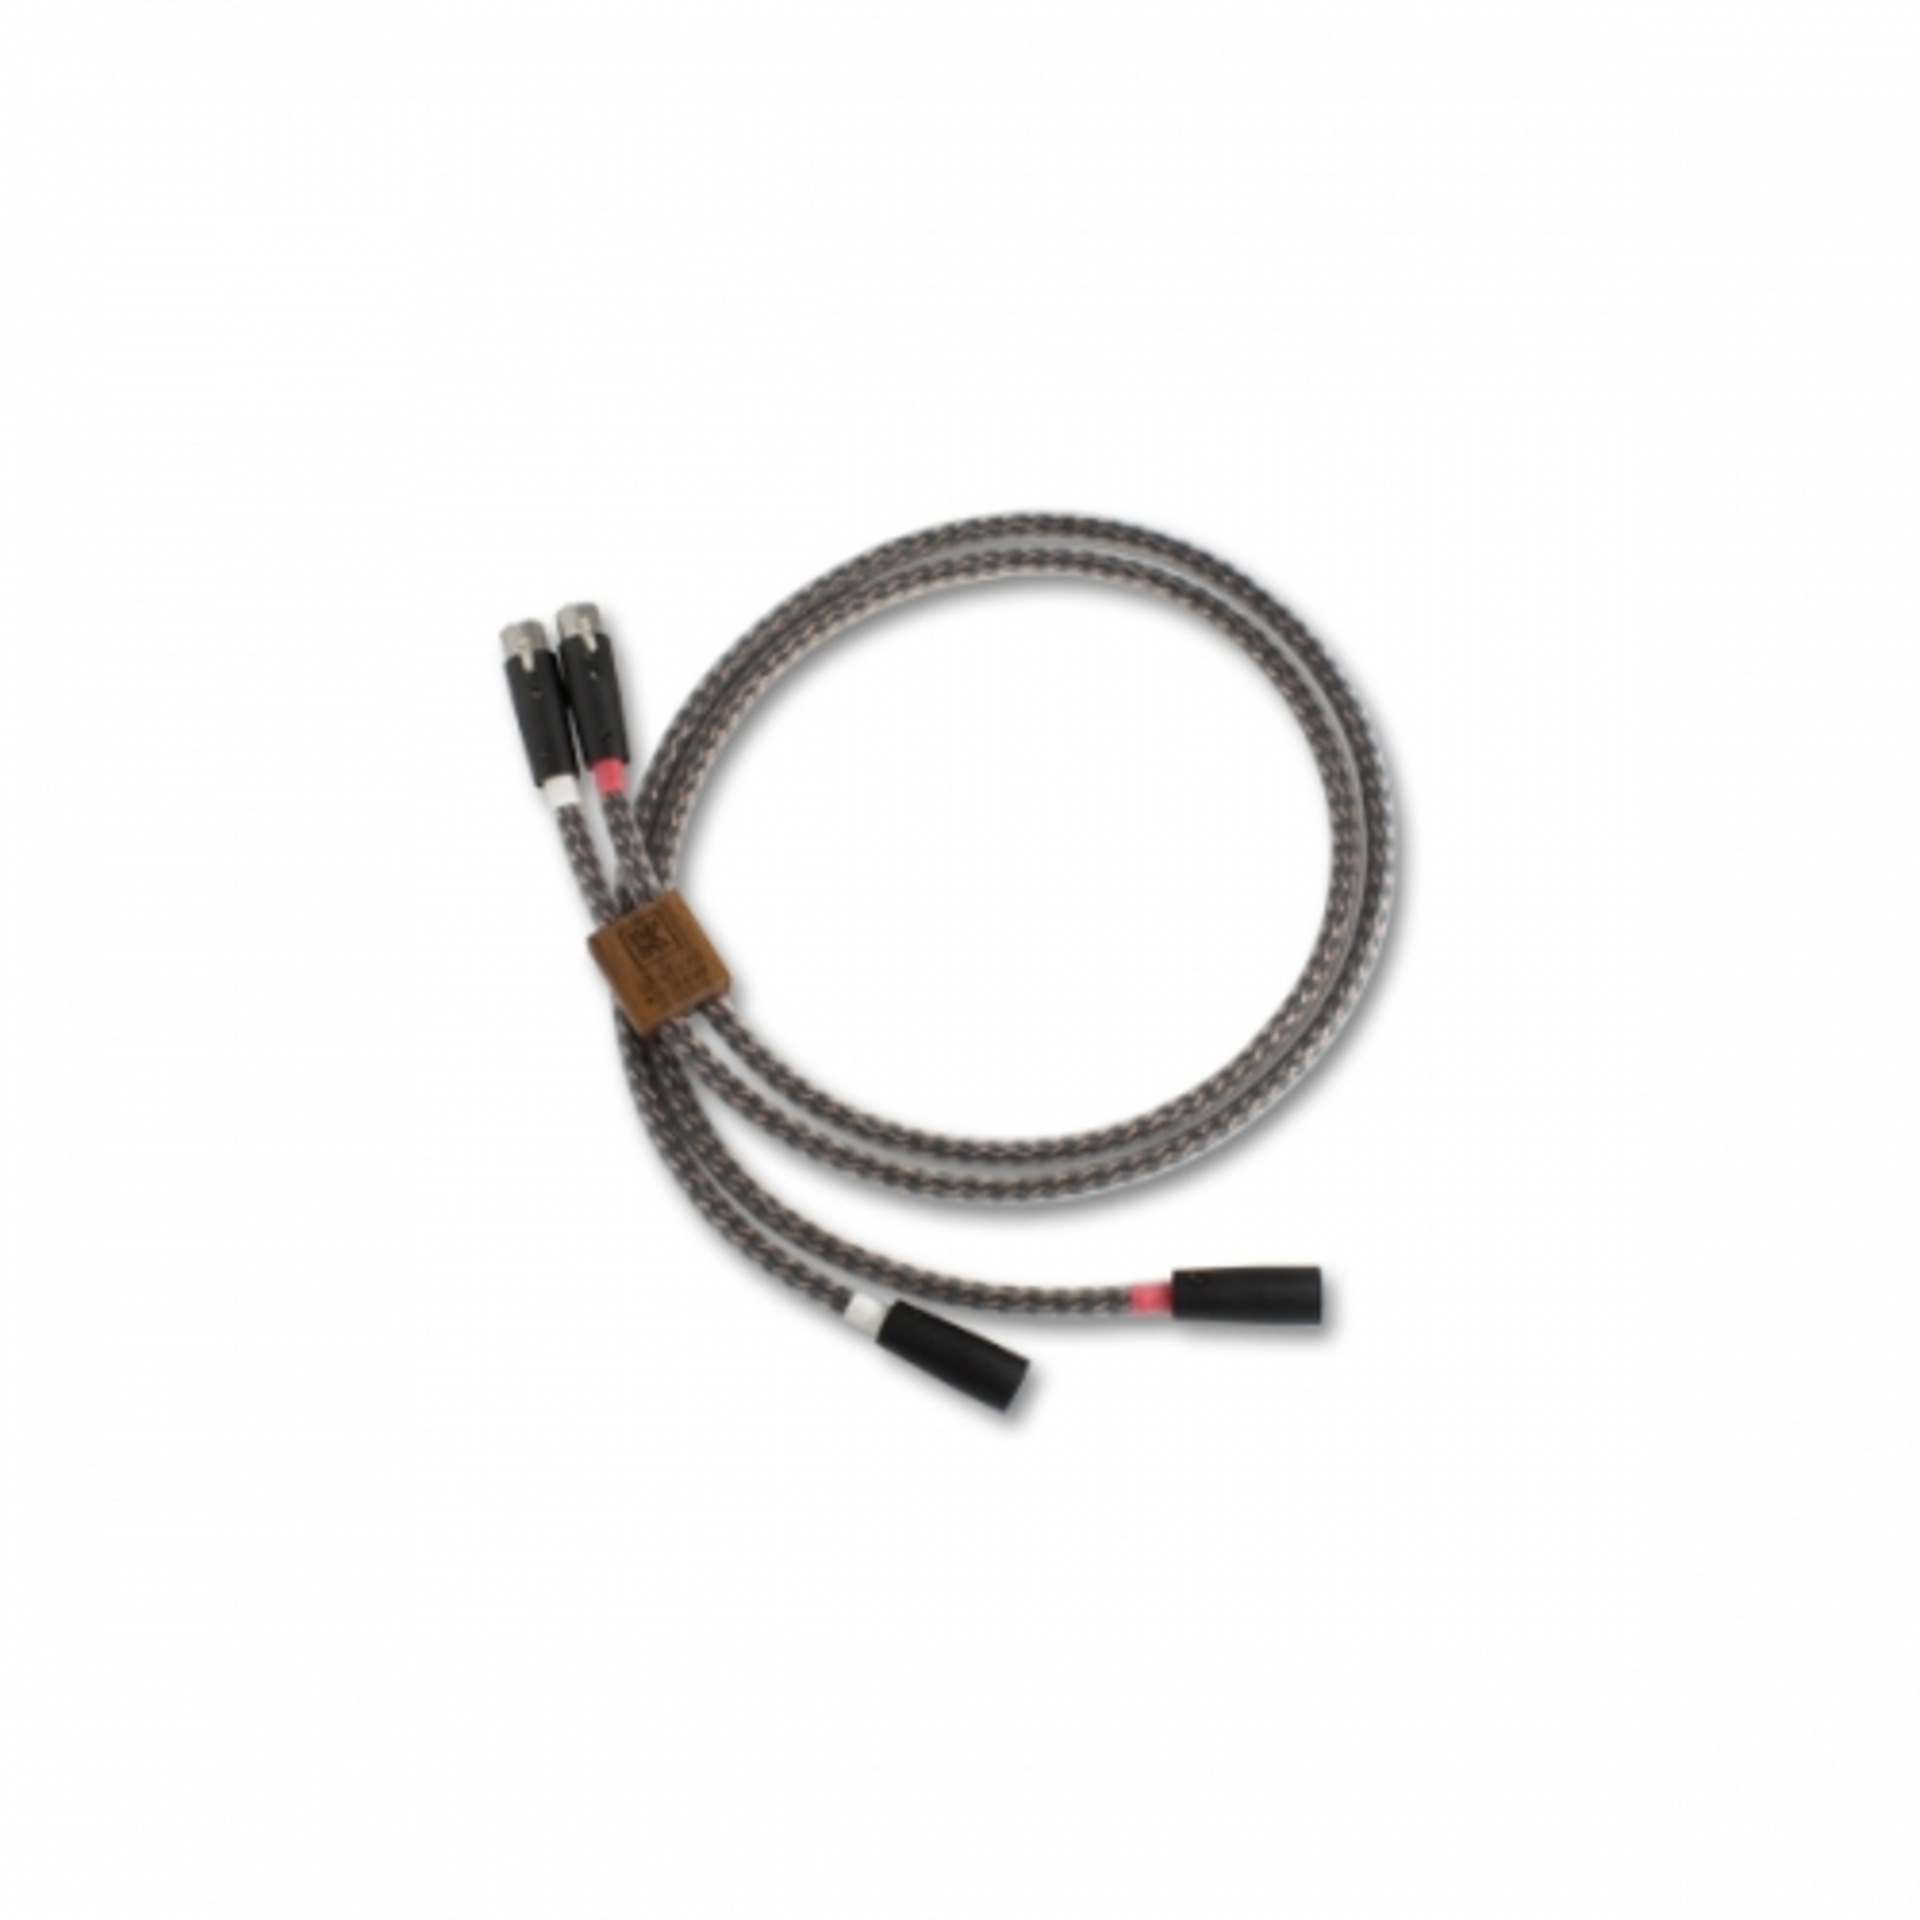 Kimber Kable - KS1116 Interconnects(킴버케이블 KS1116 인터커넥터)